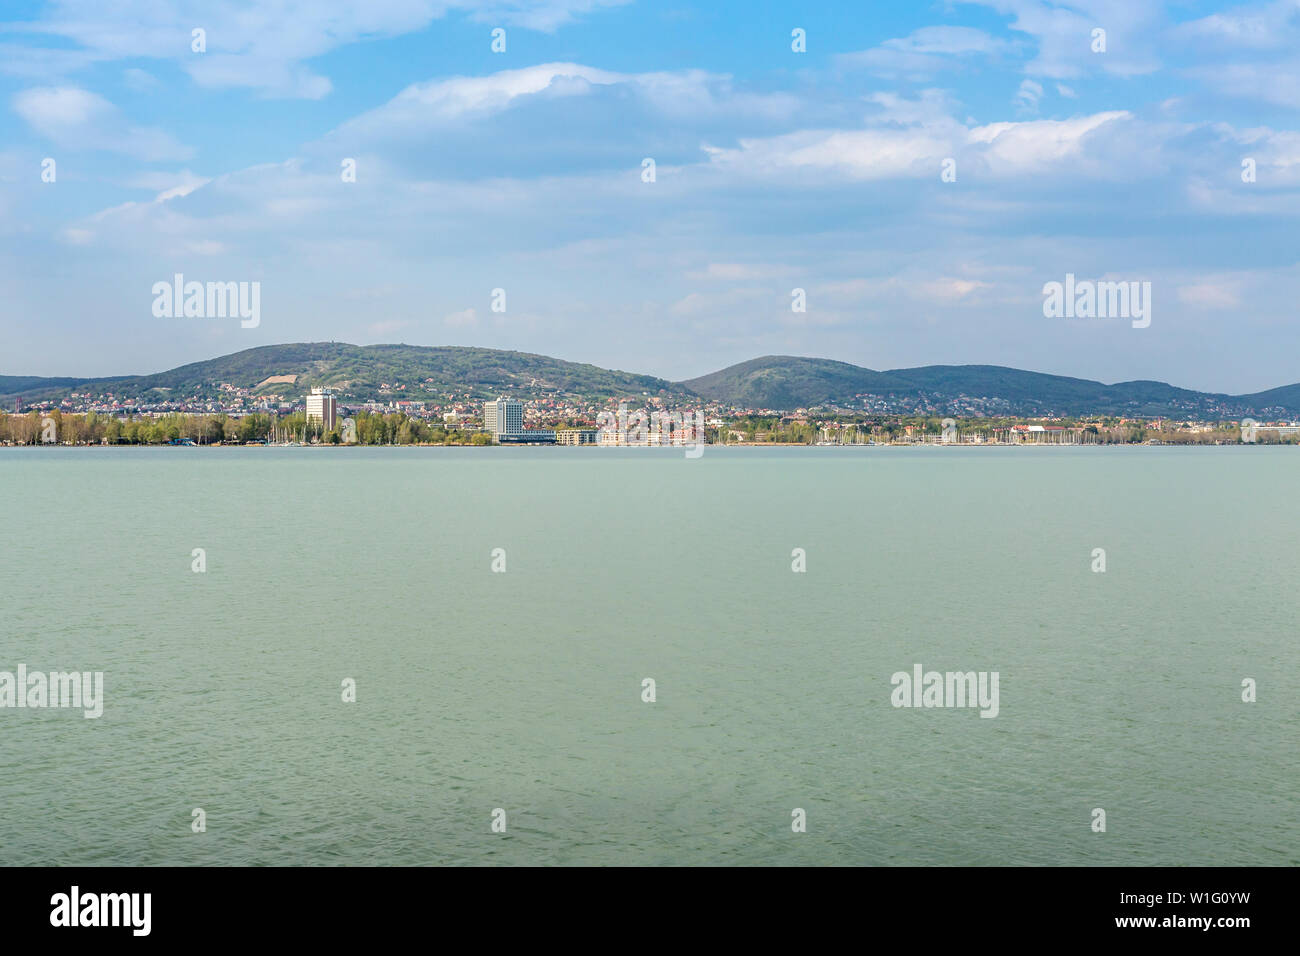 Views of Balatonfured from Tihany, Lake Balaton, Hungary Stock Photo